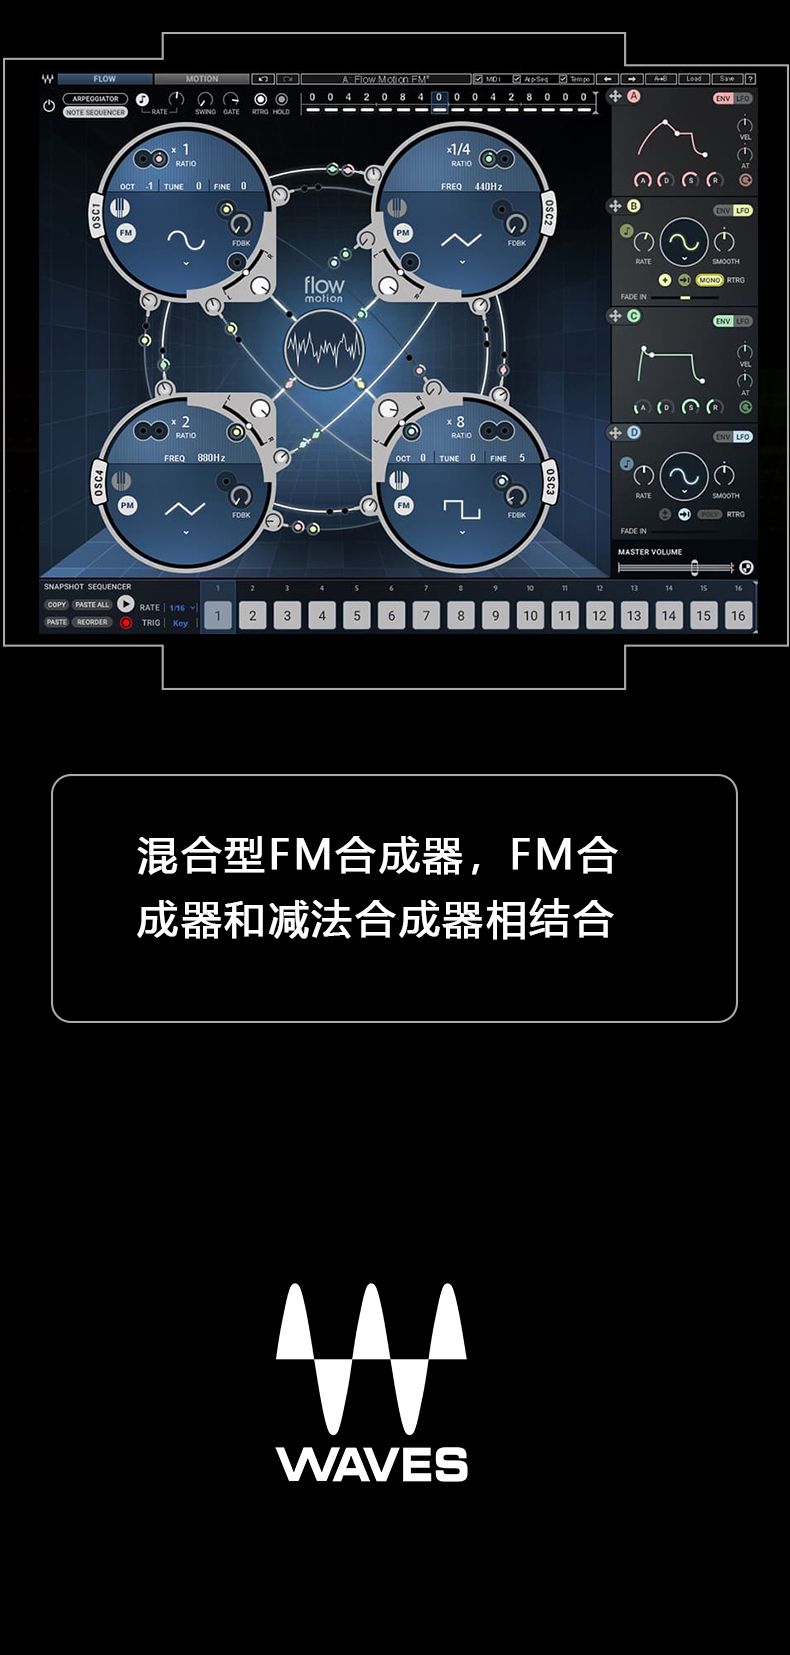 Flow Motion FM Synth 混合型合成器(图5)